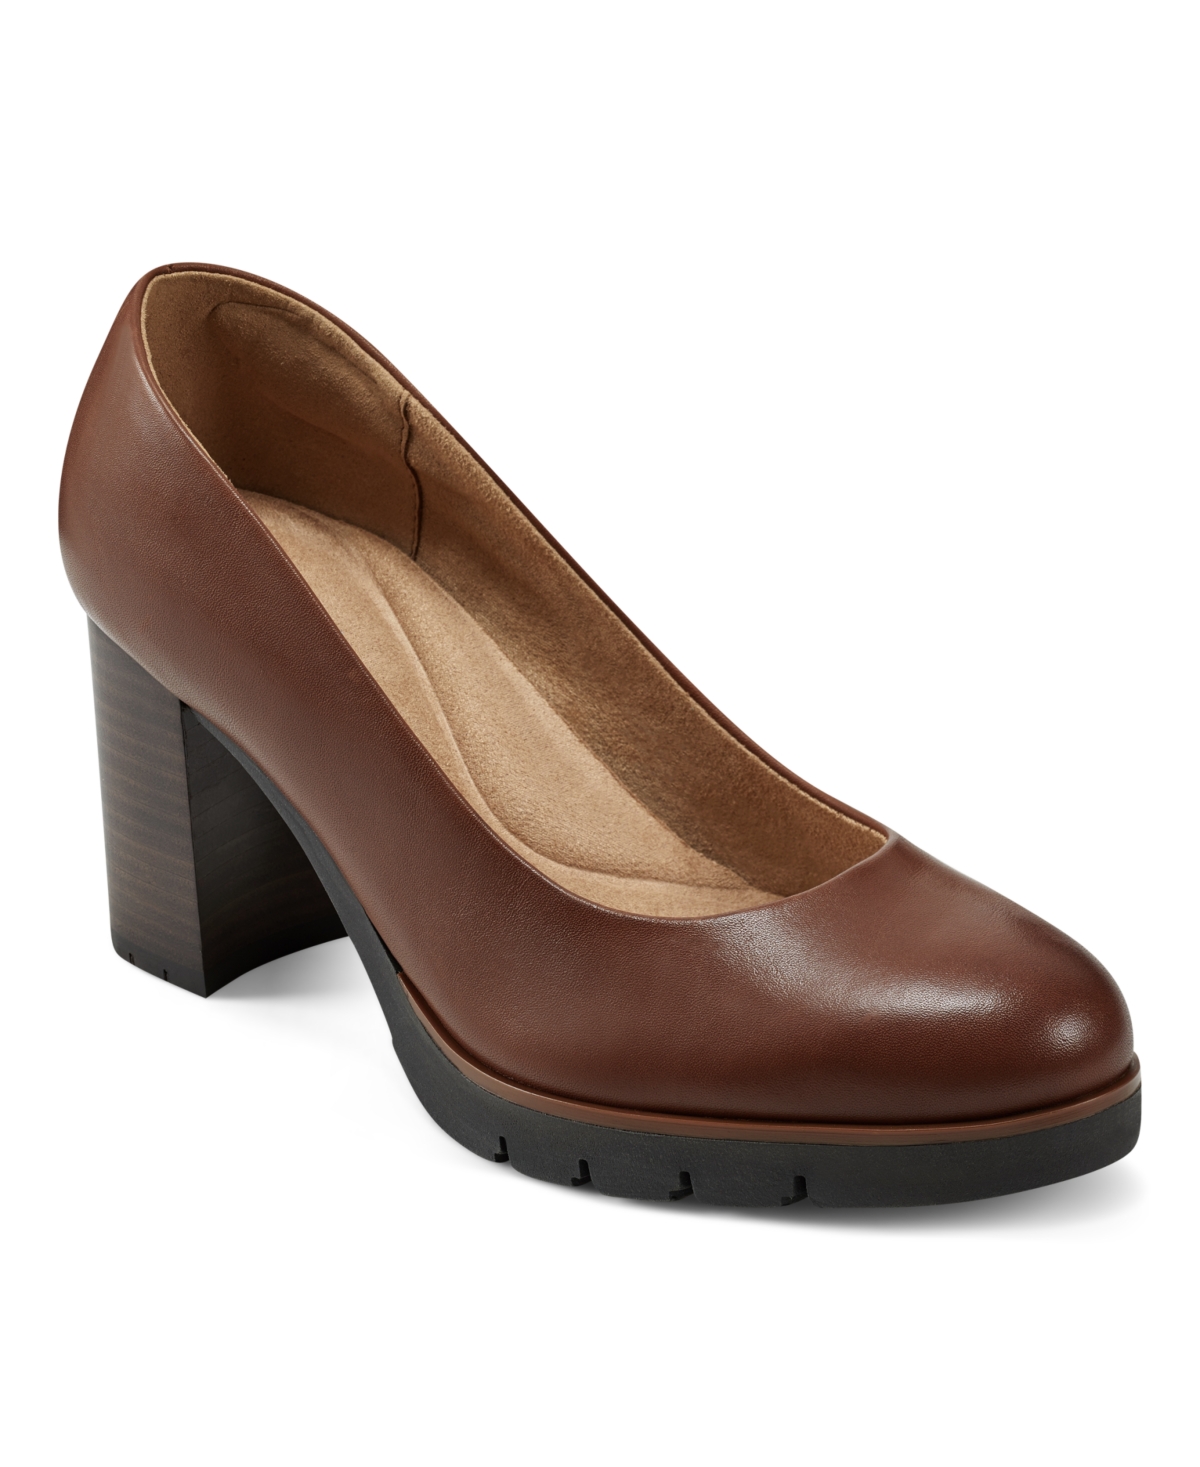 Women's Eflex Mckay Block Heel Slip-On Dress Pumps - Medium Brown Leather